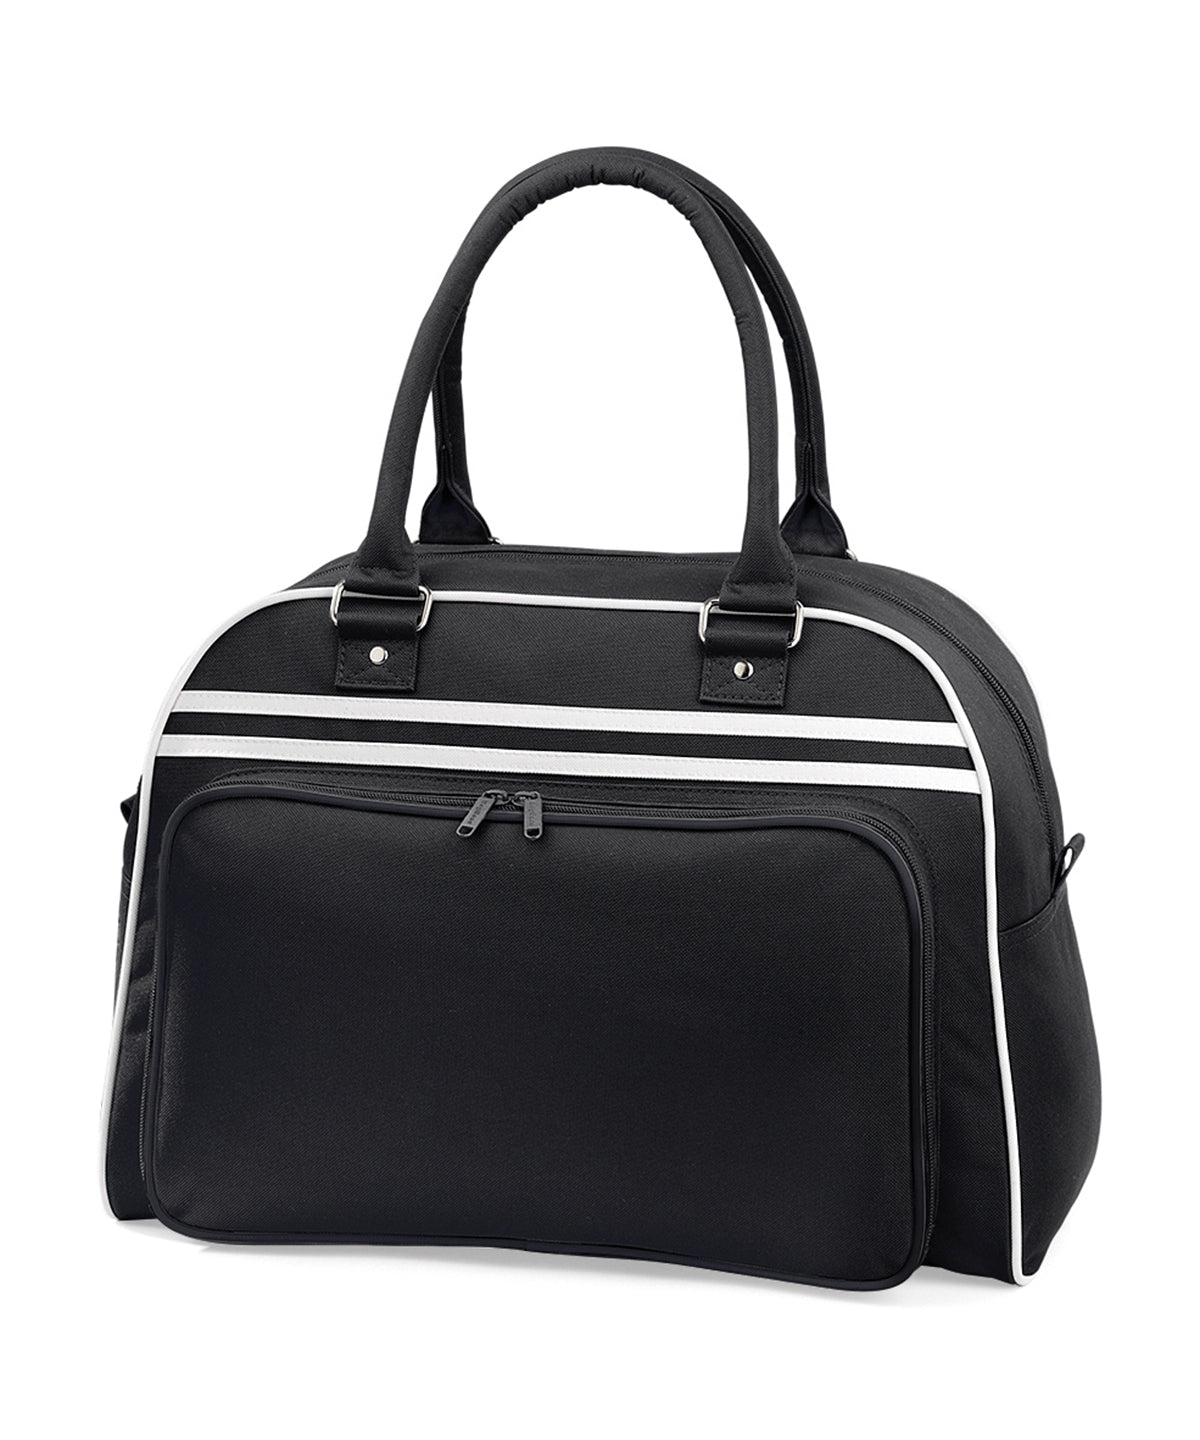 Personalised Bags - Black Bagbase Retro bowling bag